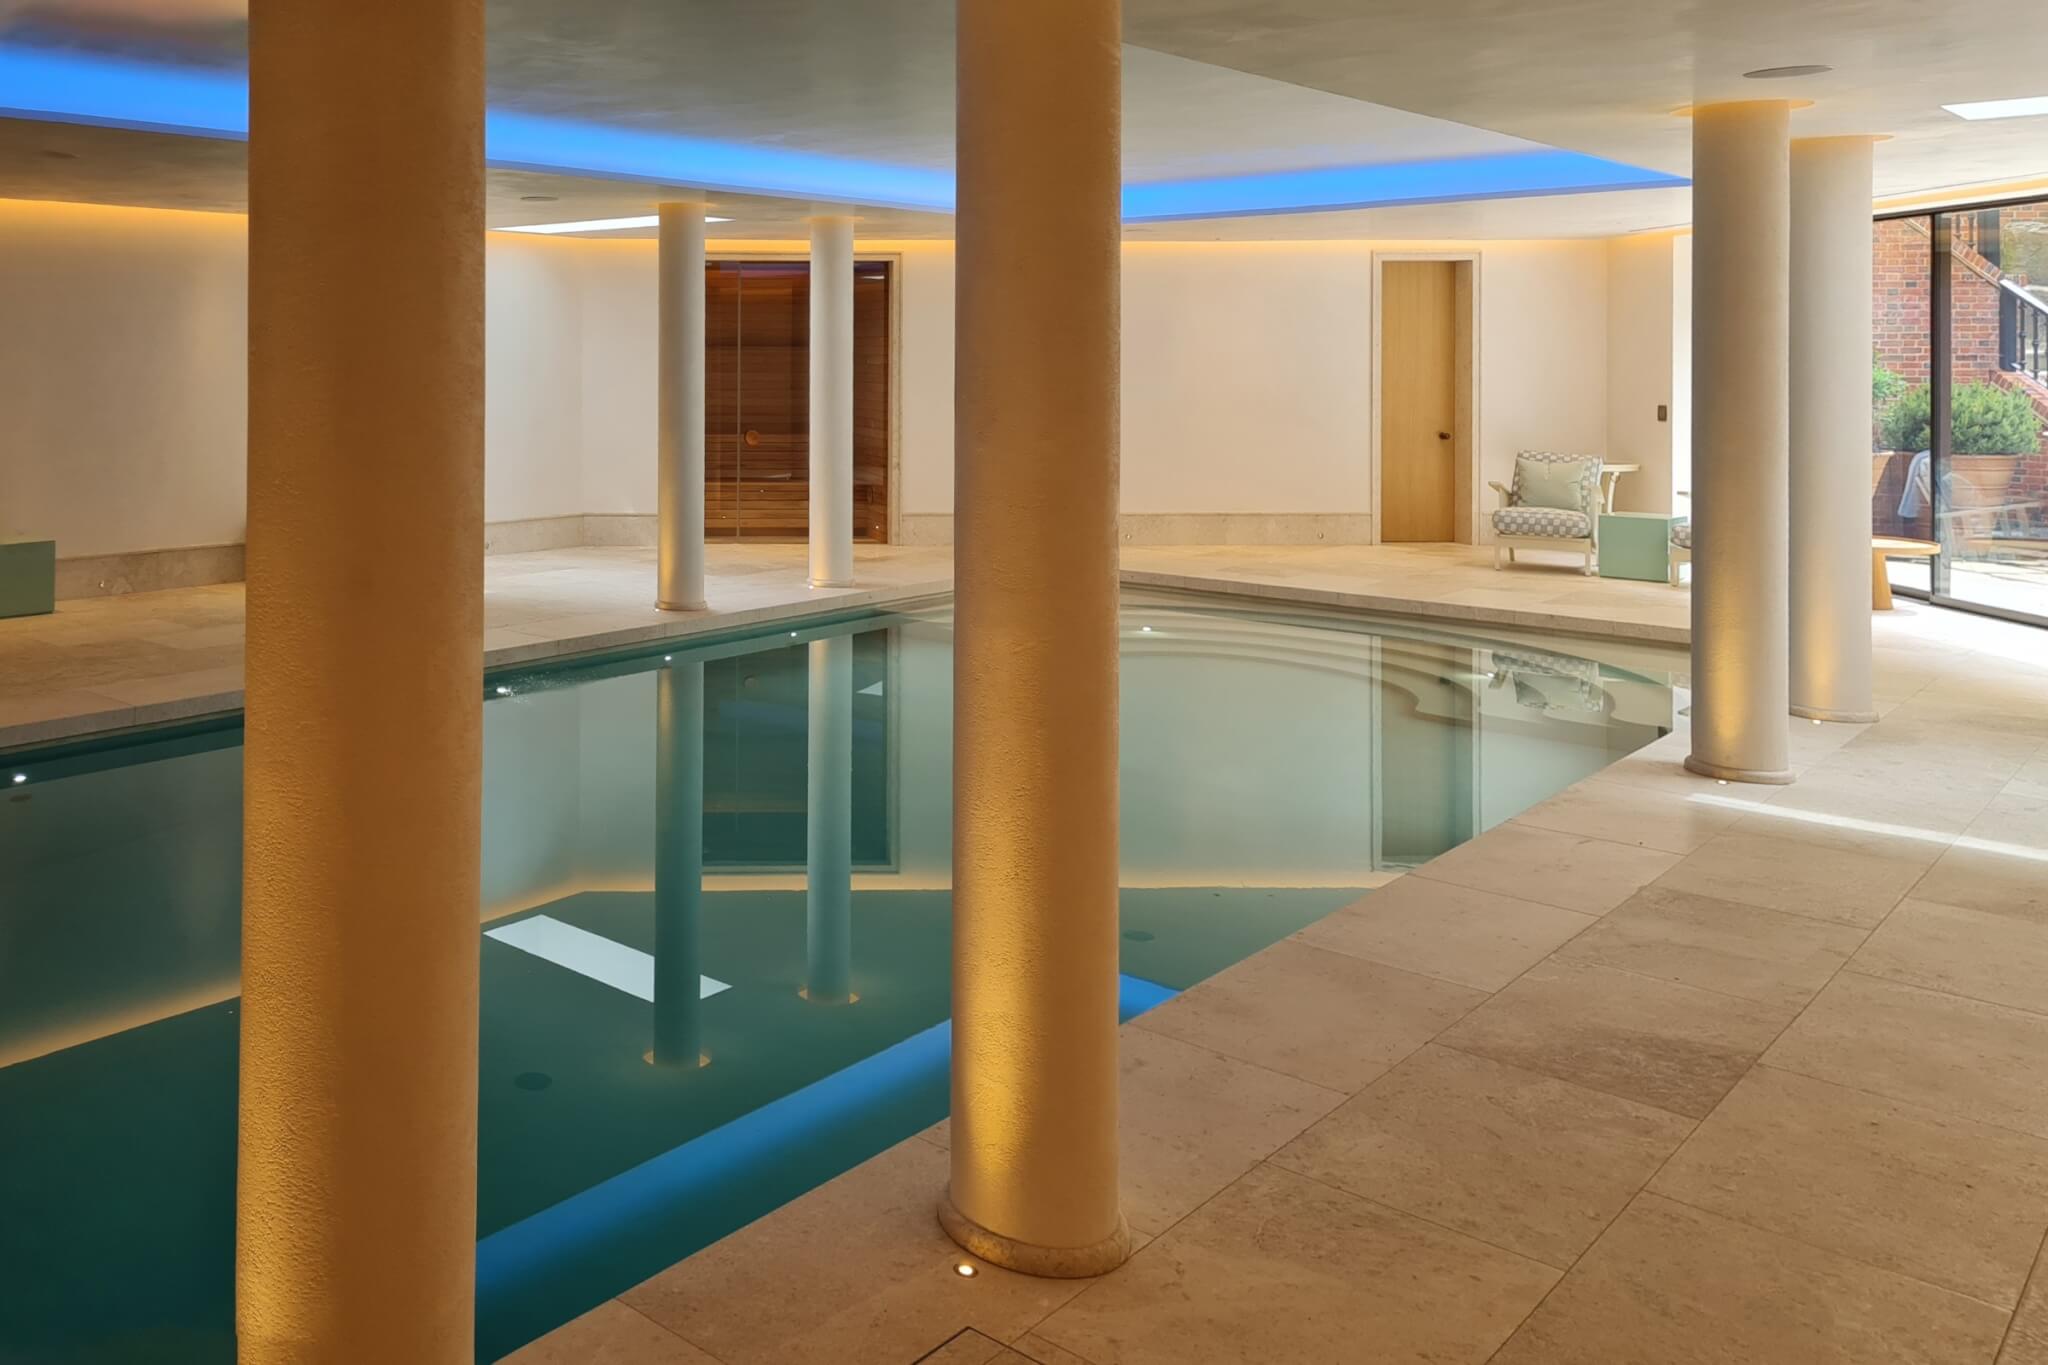 Discreet basement pool ventilation in a luxury Hampstead residence